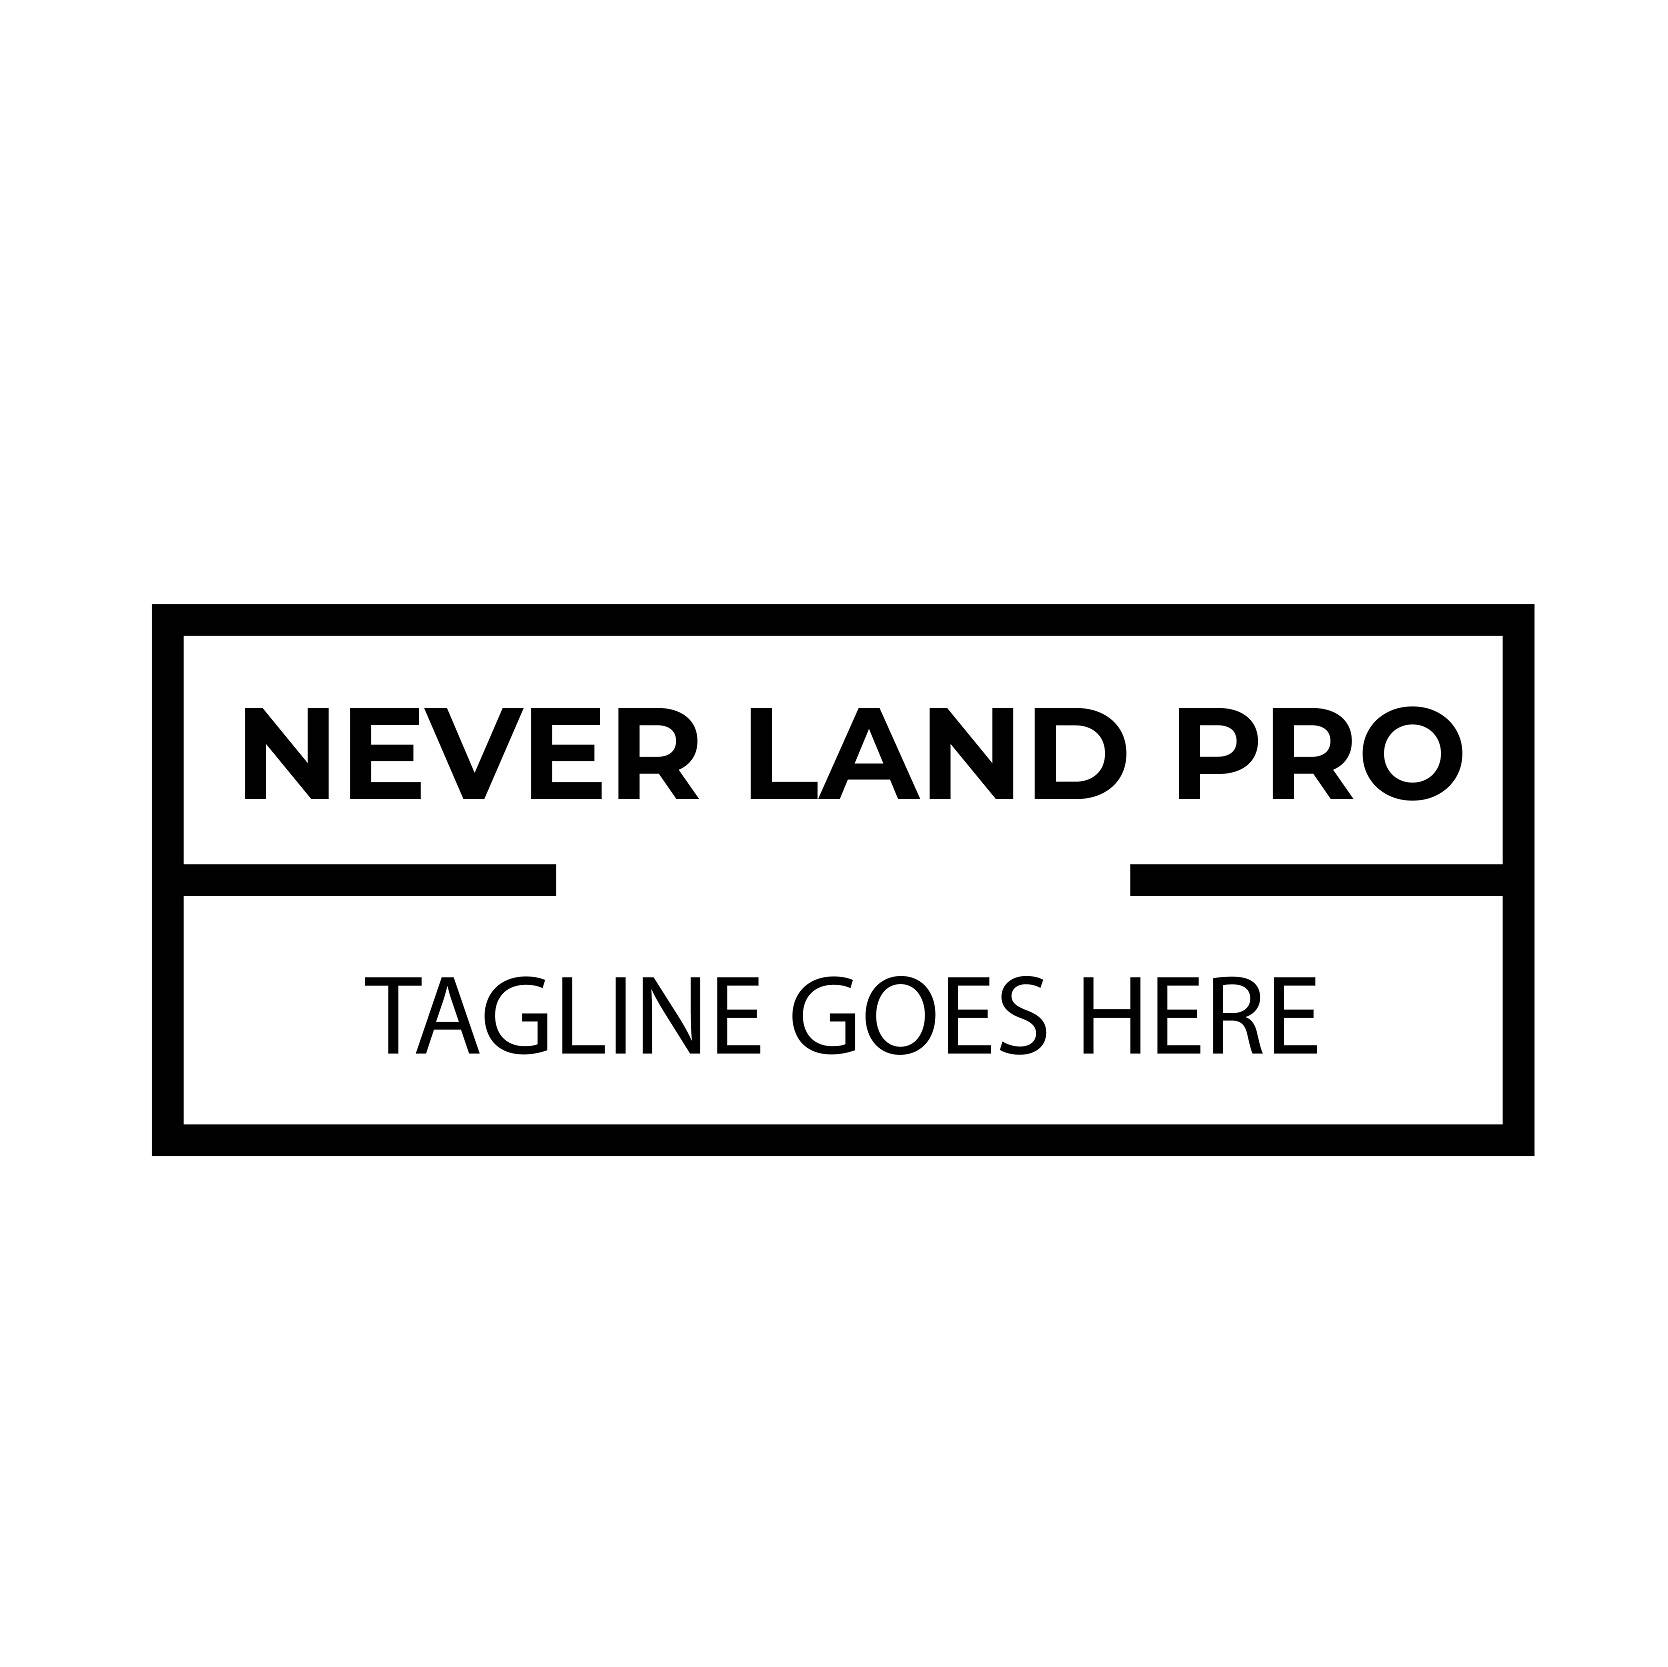 Never land pro tag logo